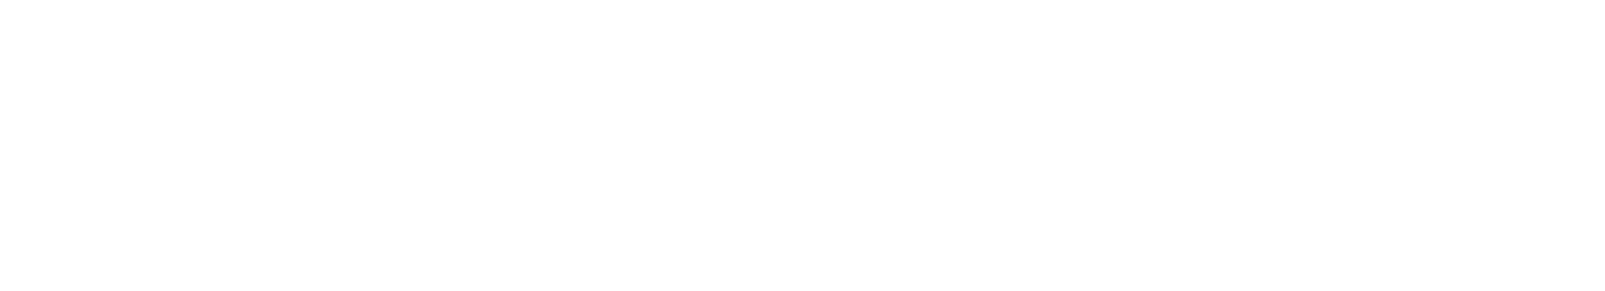 Xponential Fitness logo grand pour les fonds sombres (PNG transparent)